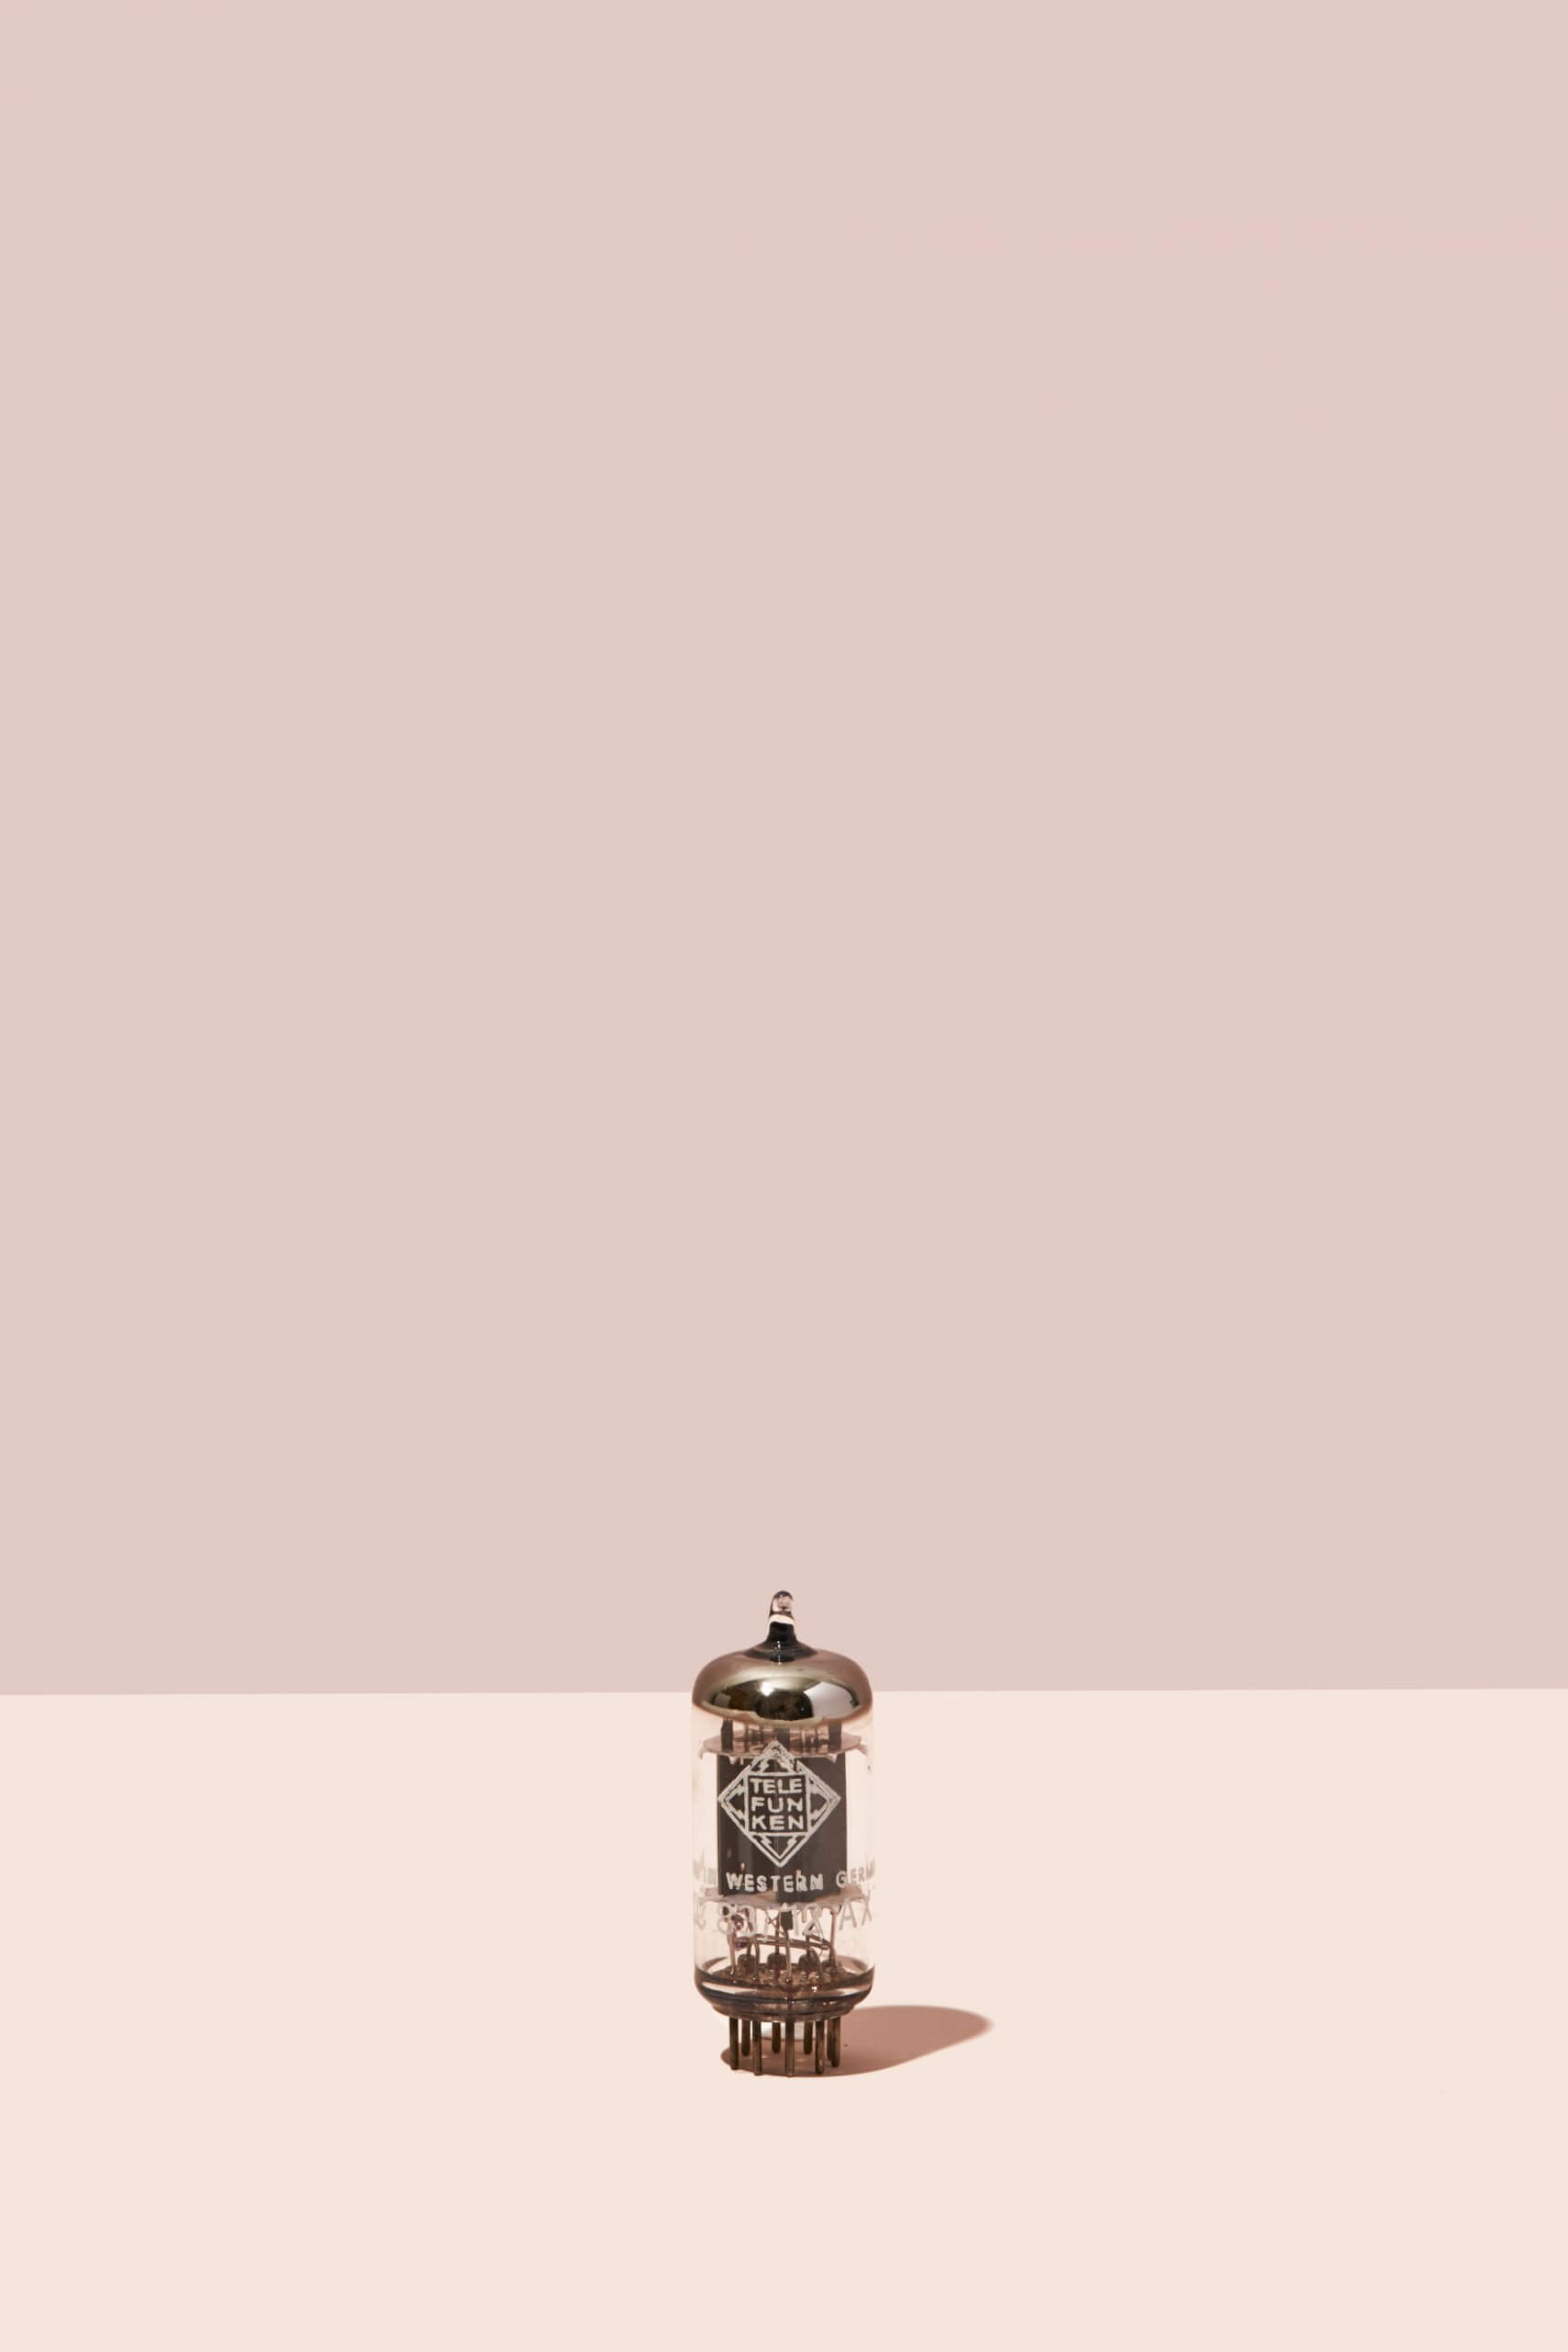 A vintage Telefunken tube against a two-tone beige background